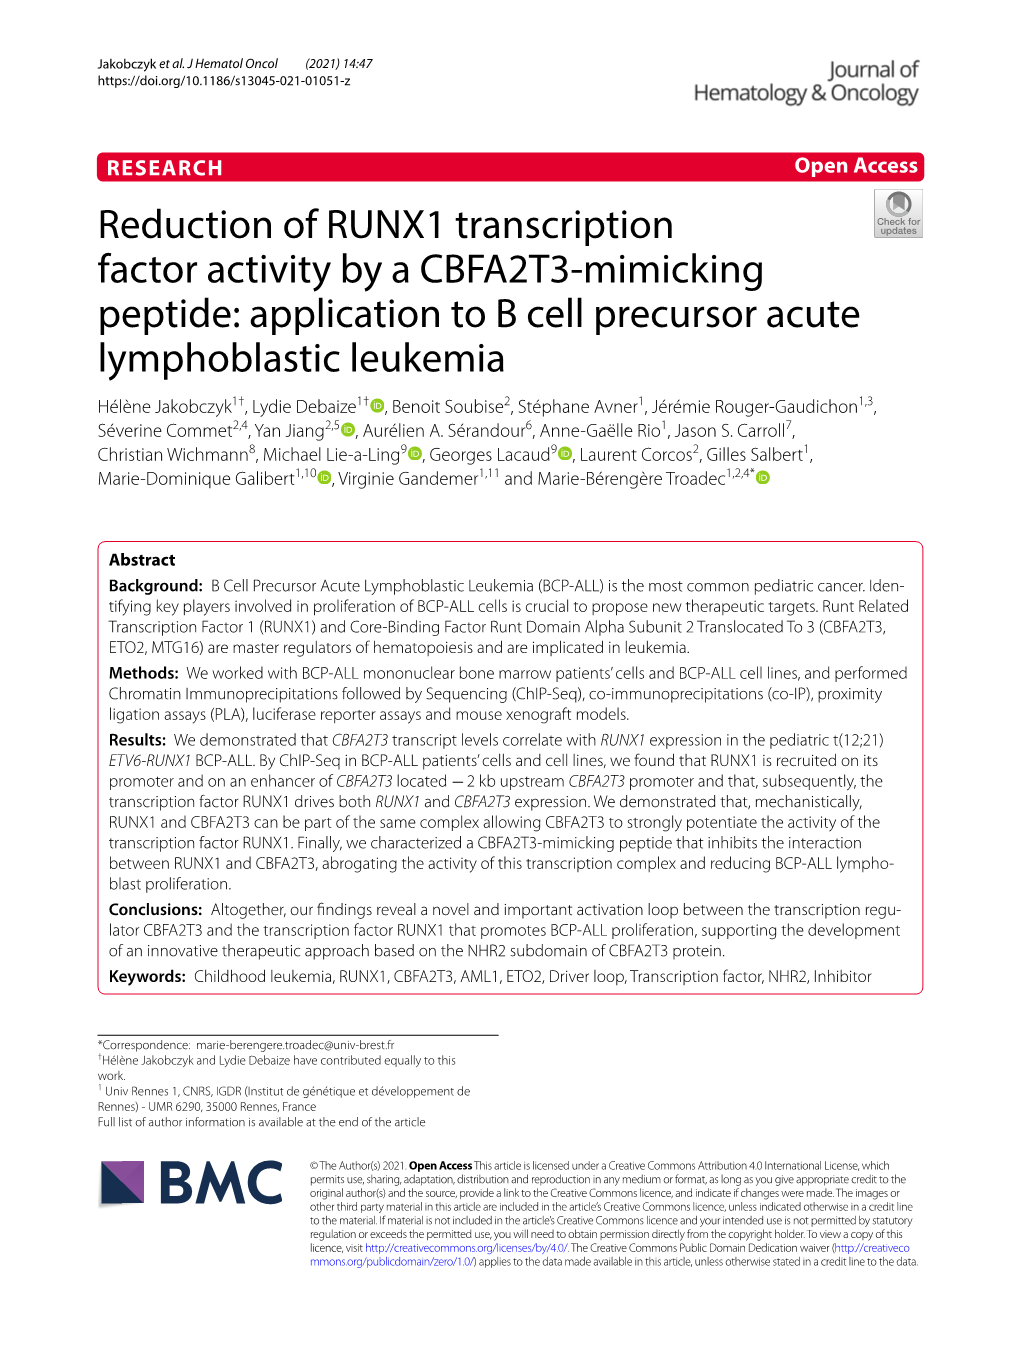 Reduction of RUNX1 Transcription